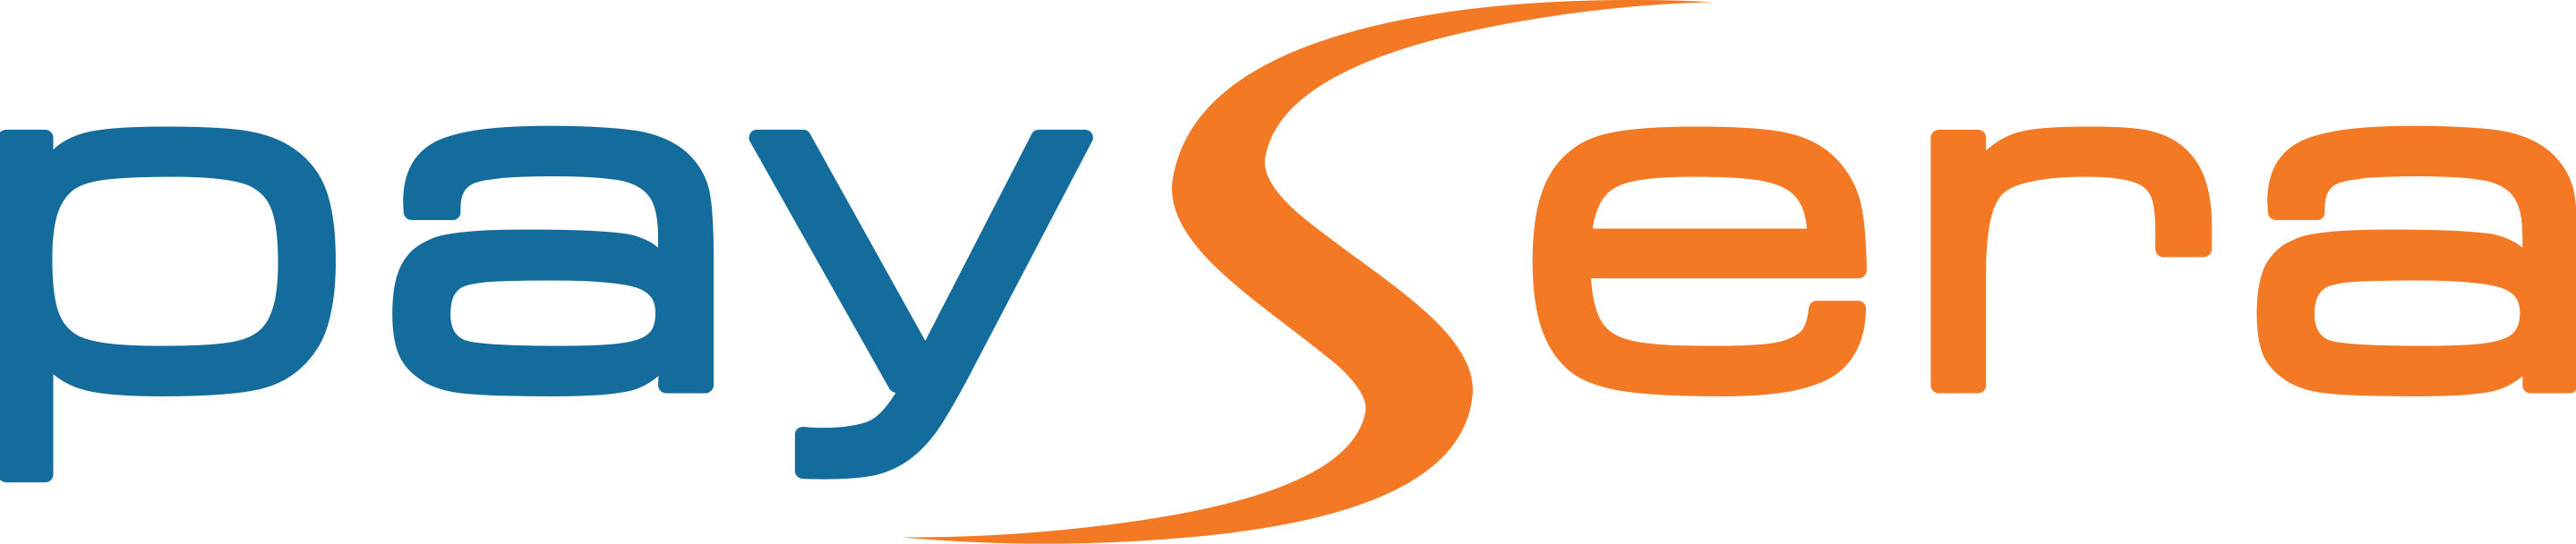 Paysera Logo